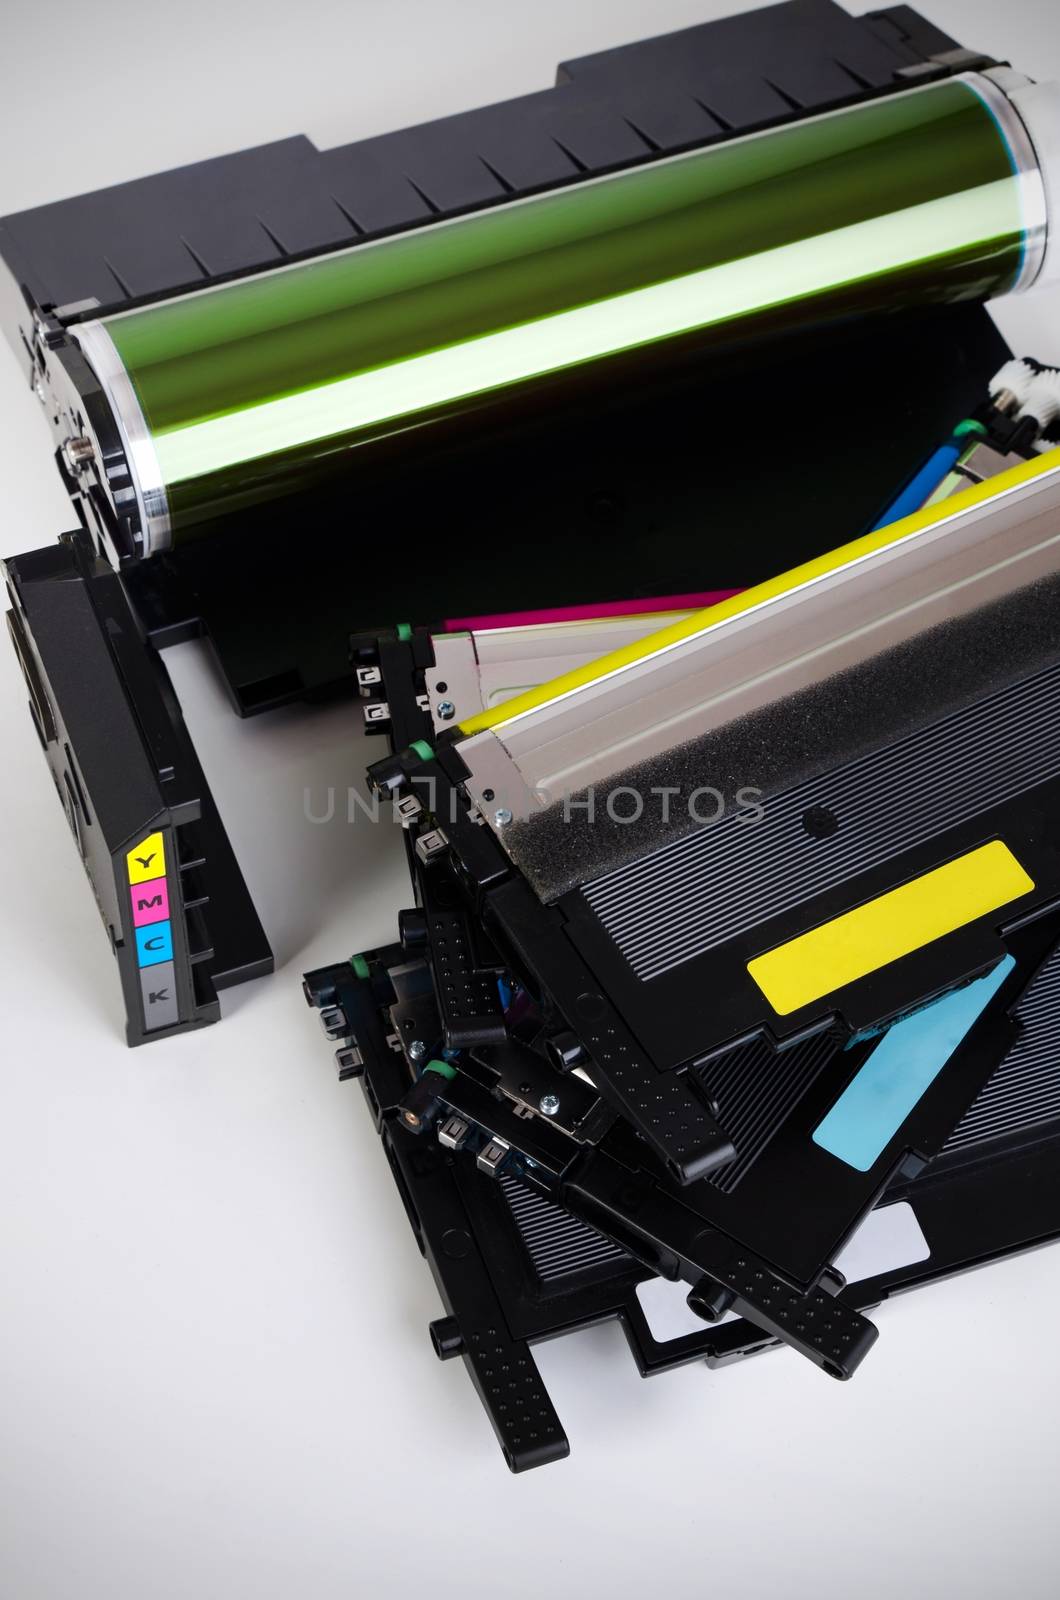 Toner cartridge set for laser printer. Computer supplies. by simpson33